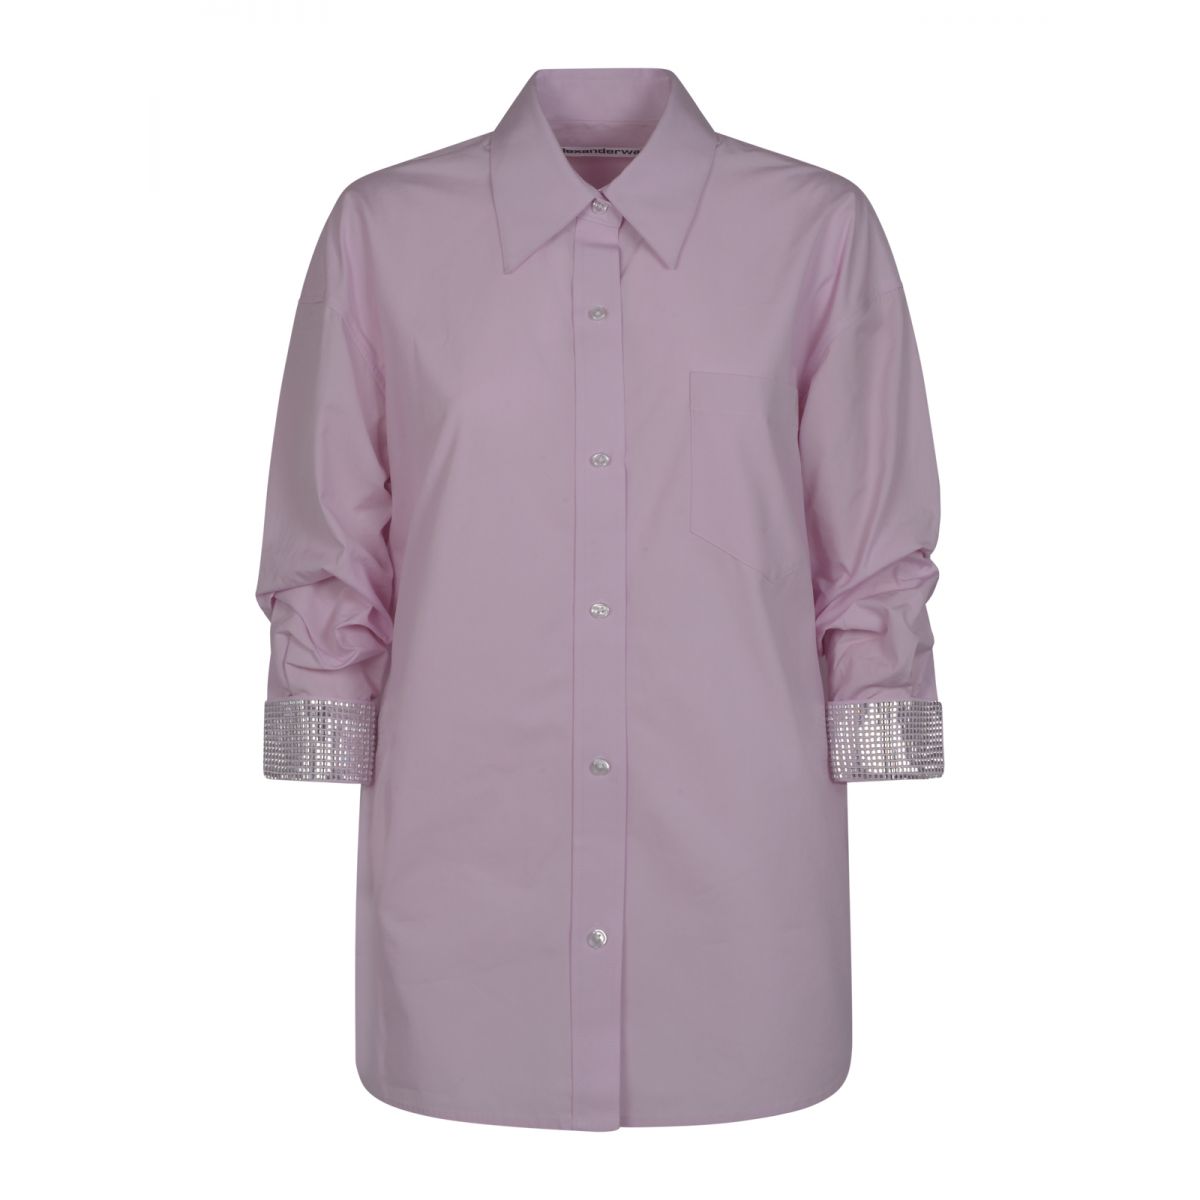 ALEXANDER WANG - Crystal cuff button down in cotton poplin shirt